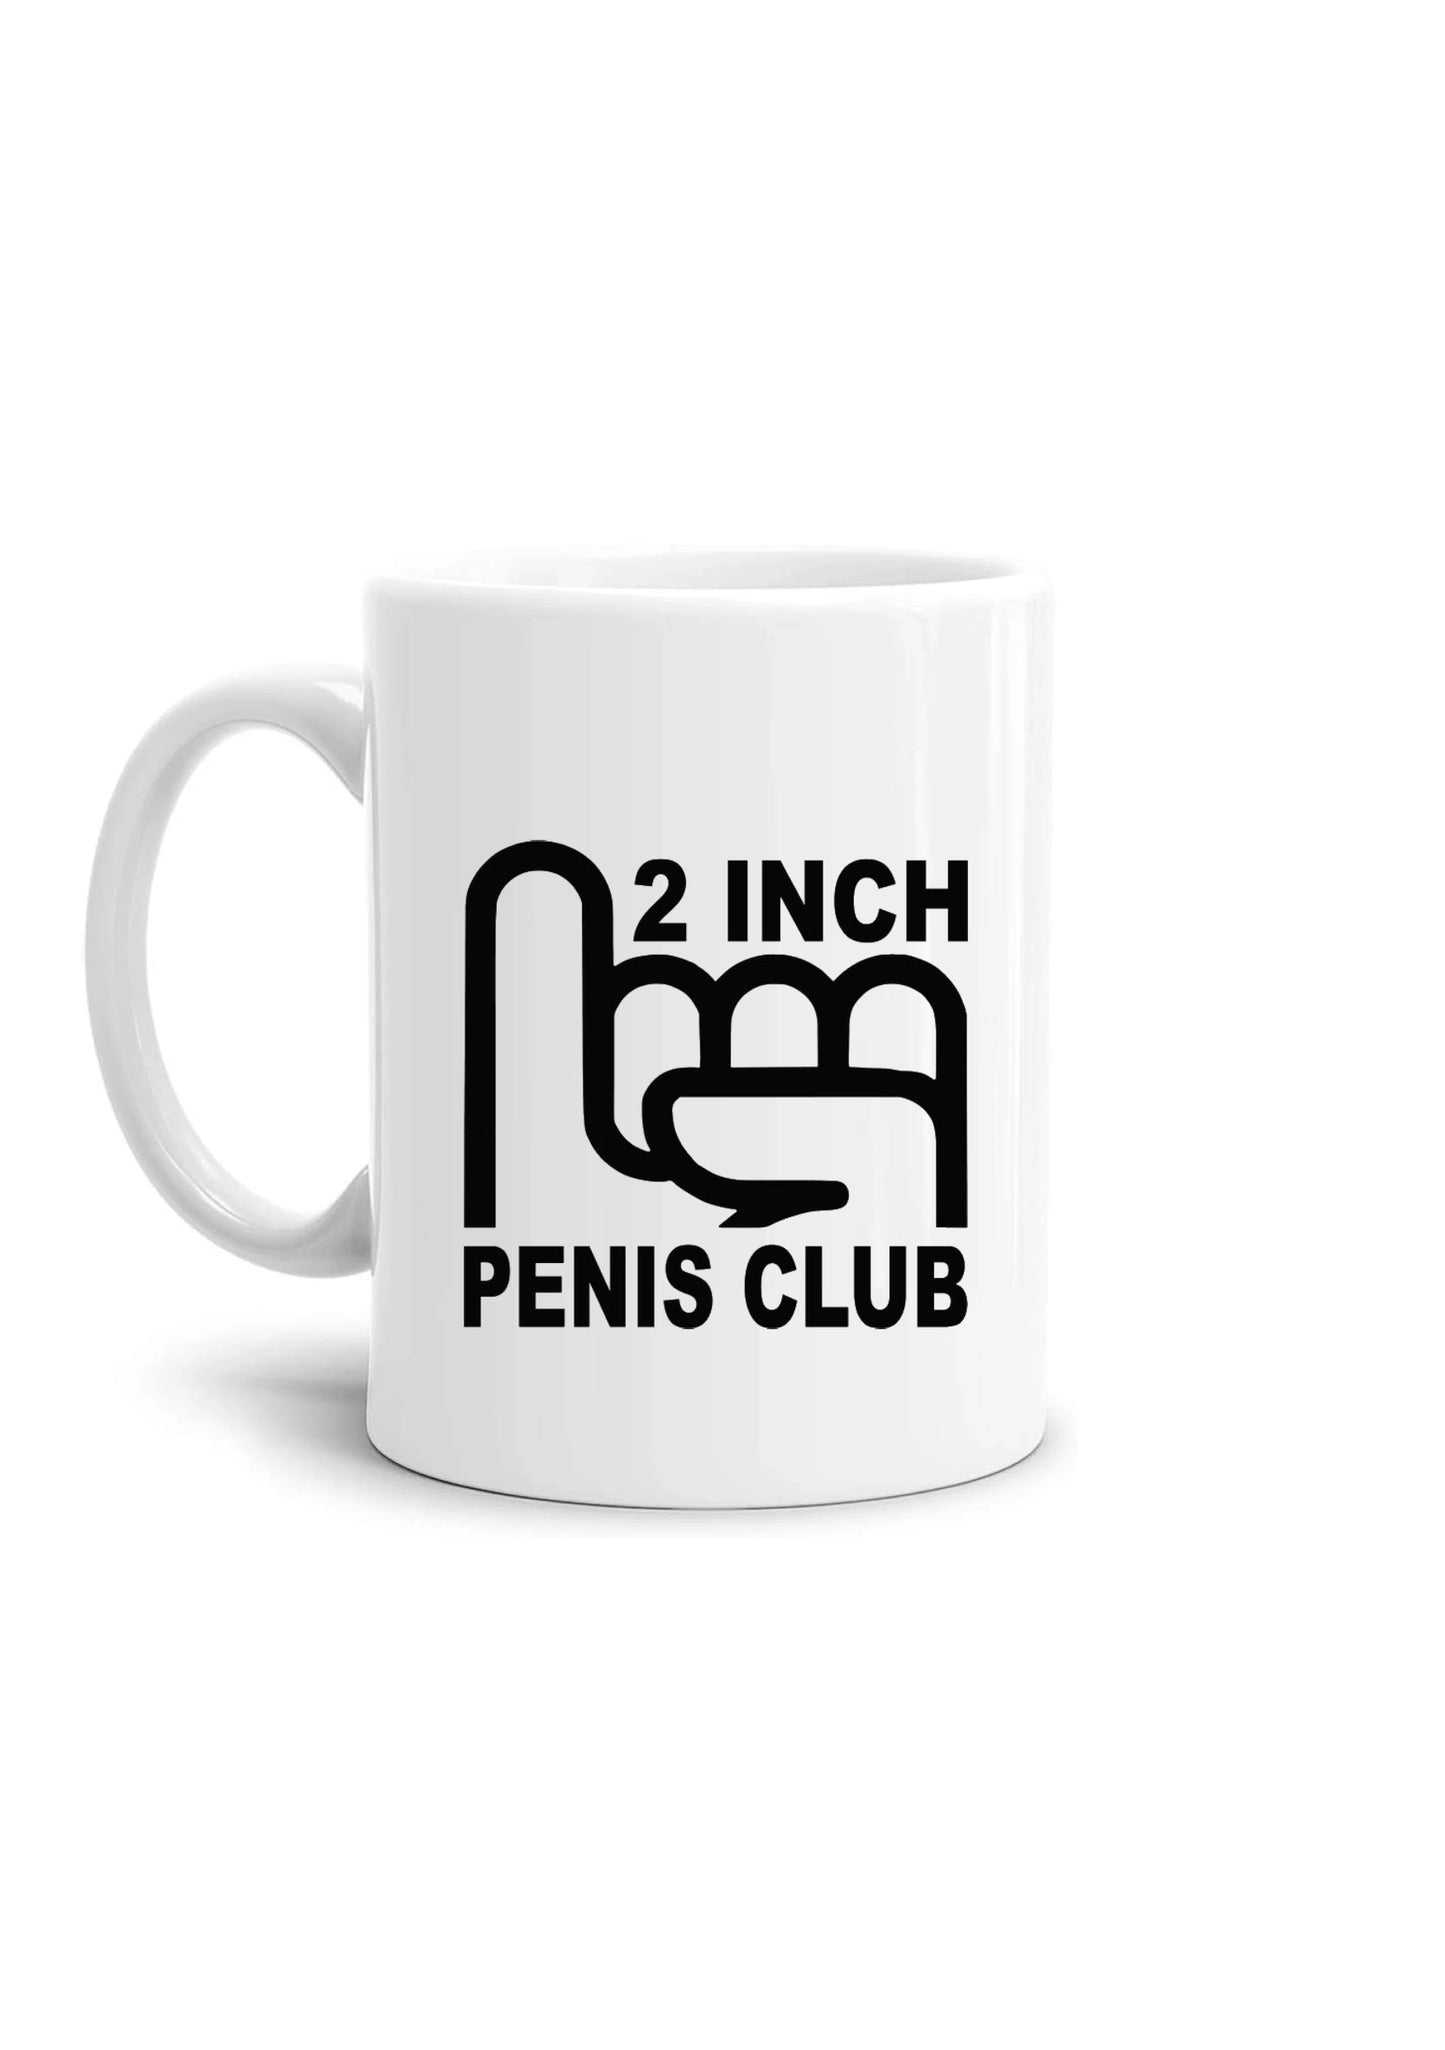 Mug cup - 2 inch penis club